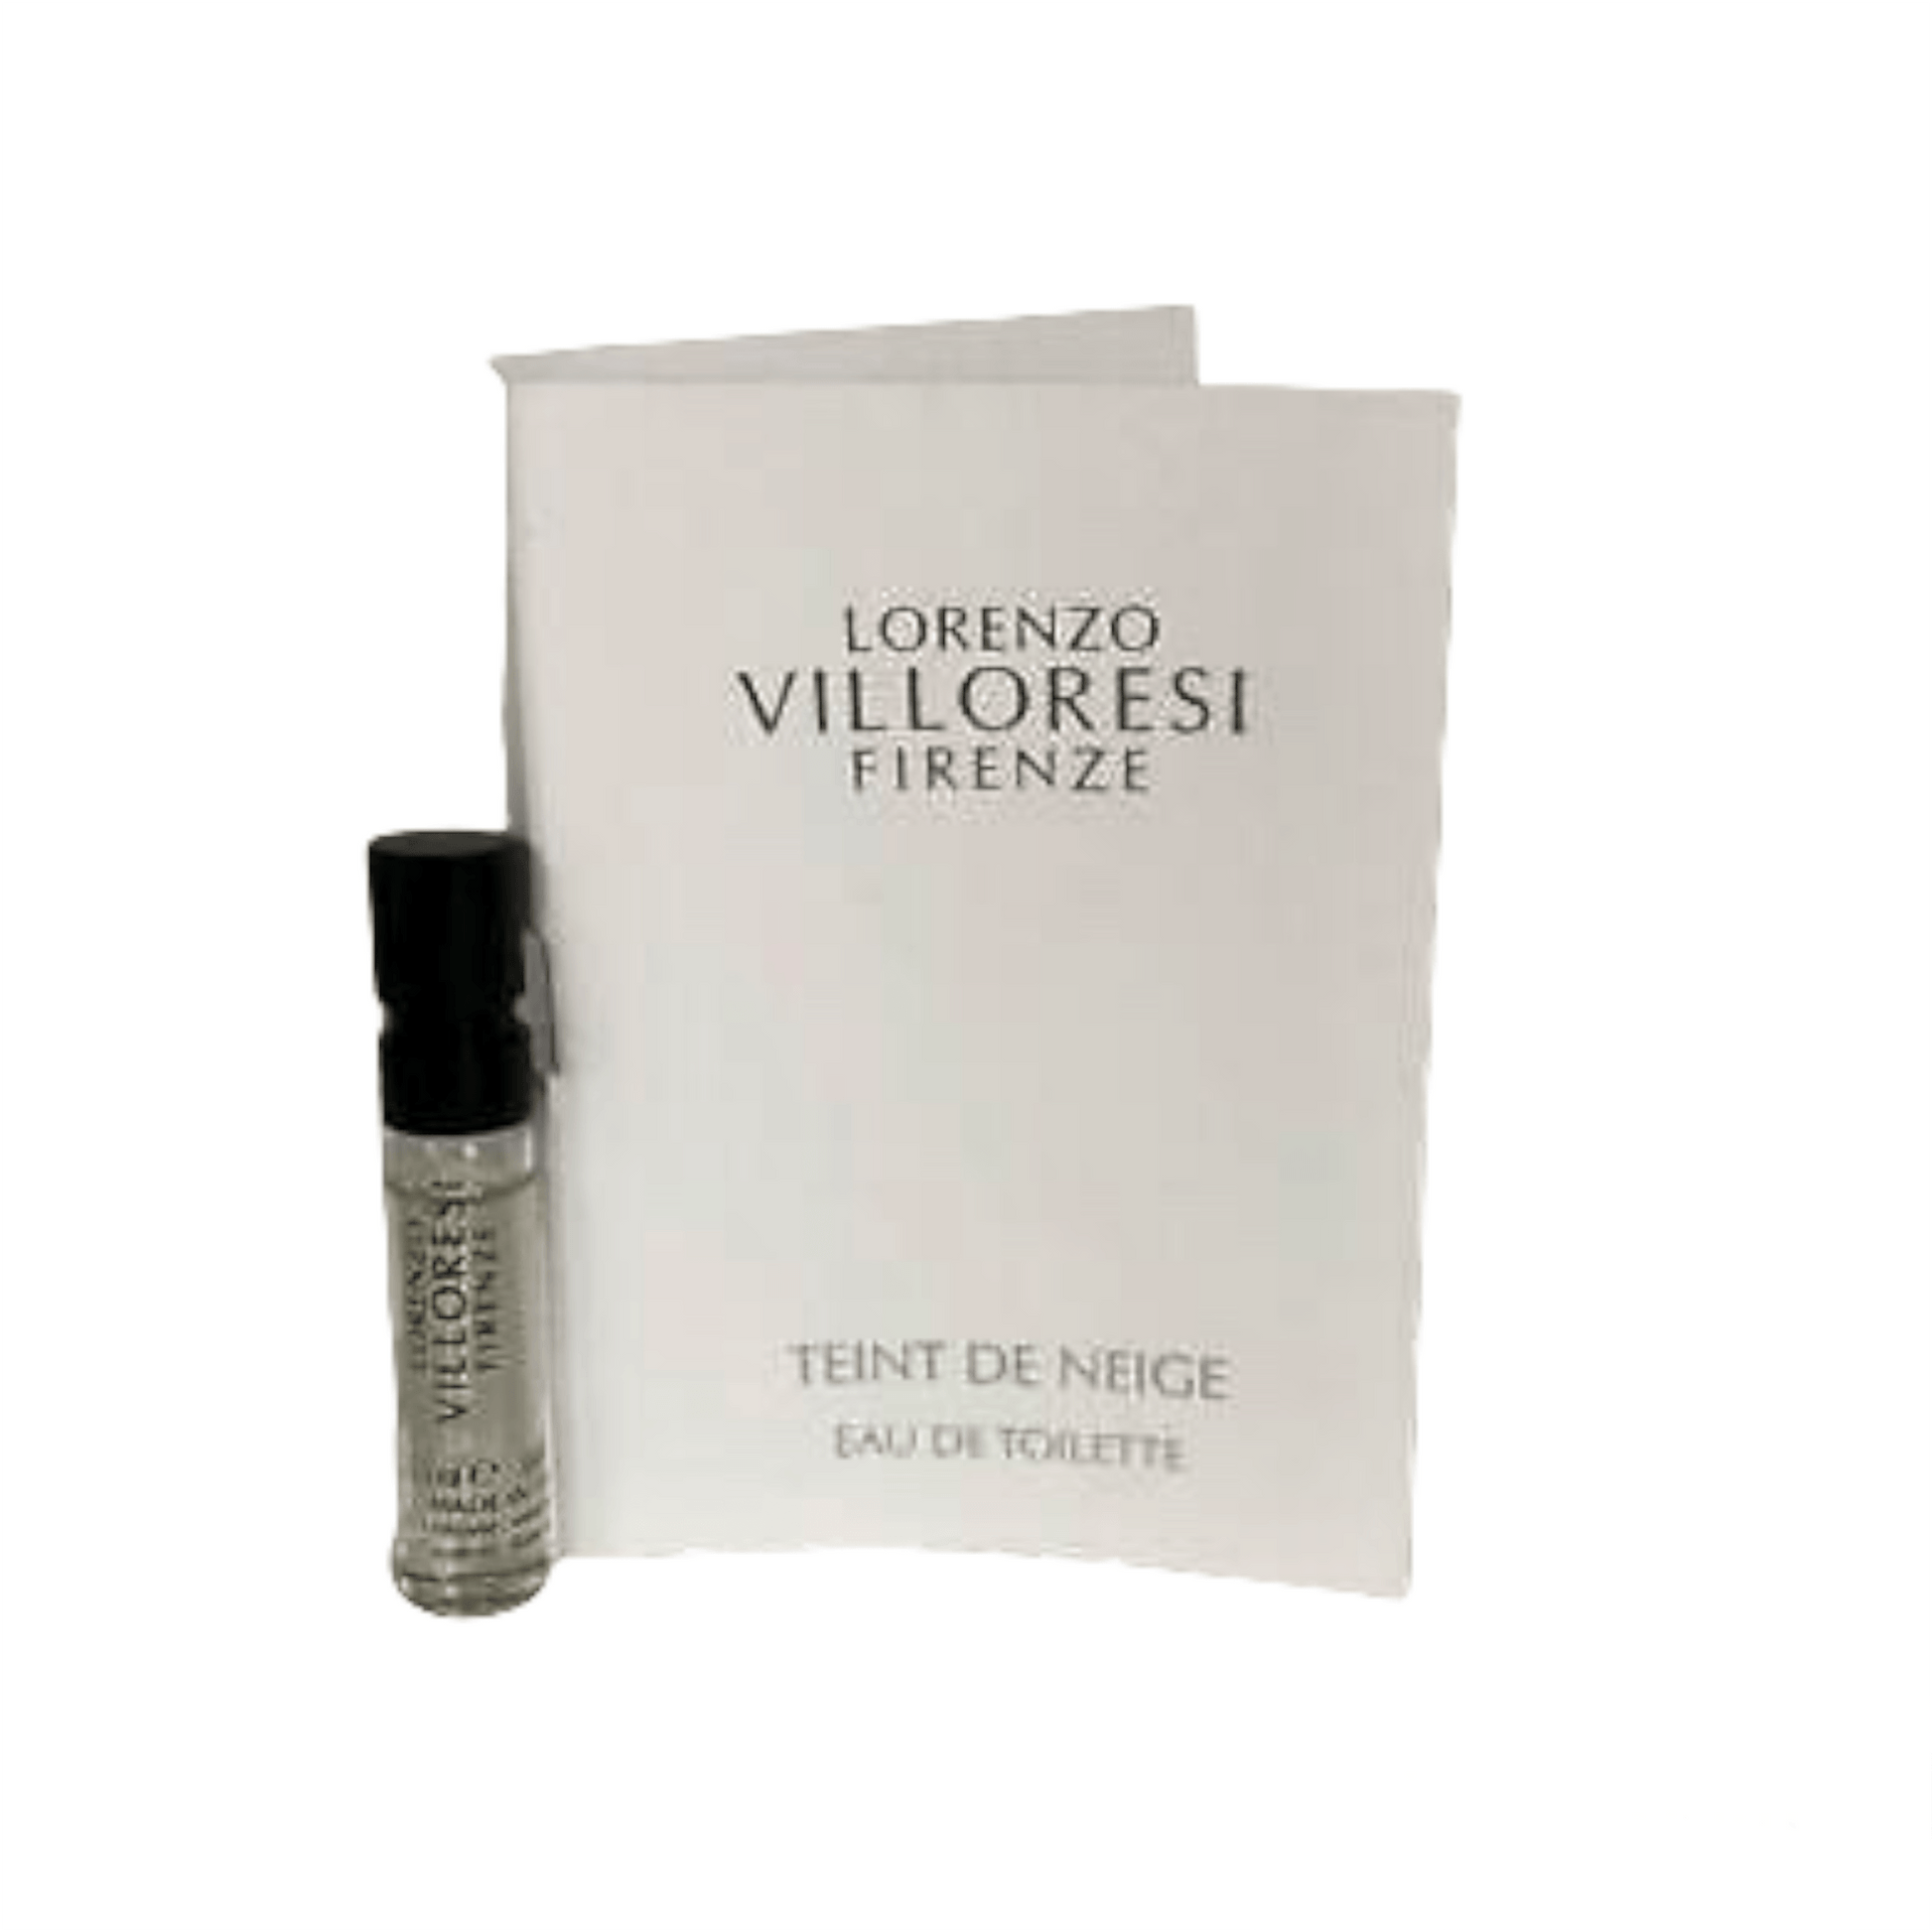 Lorenzo Villoresi Firenze Teint de Neige official scent sample 2ml 0.06 fl. o.z.